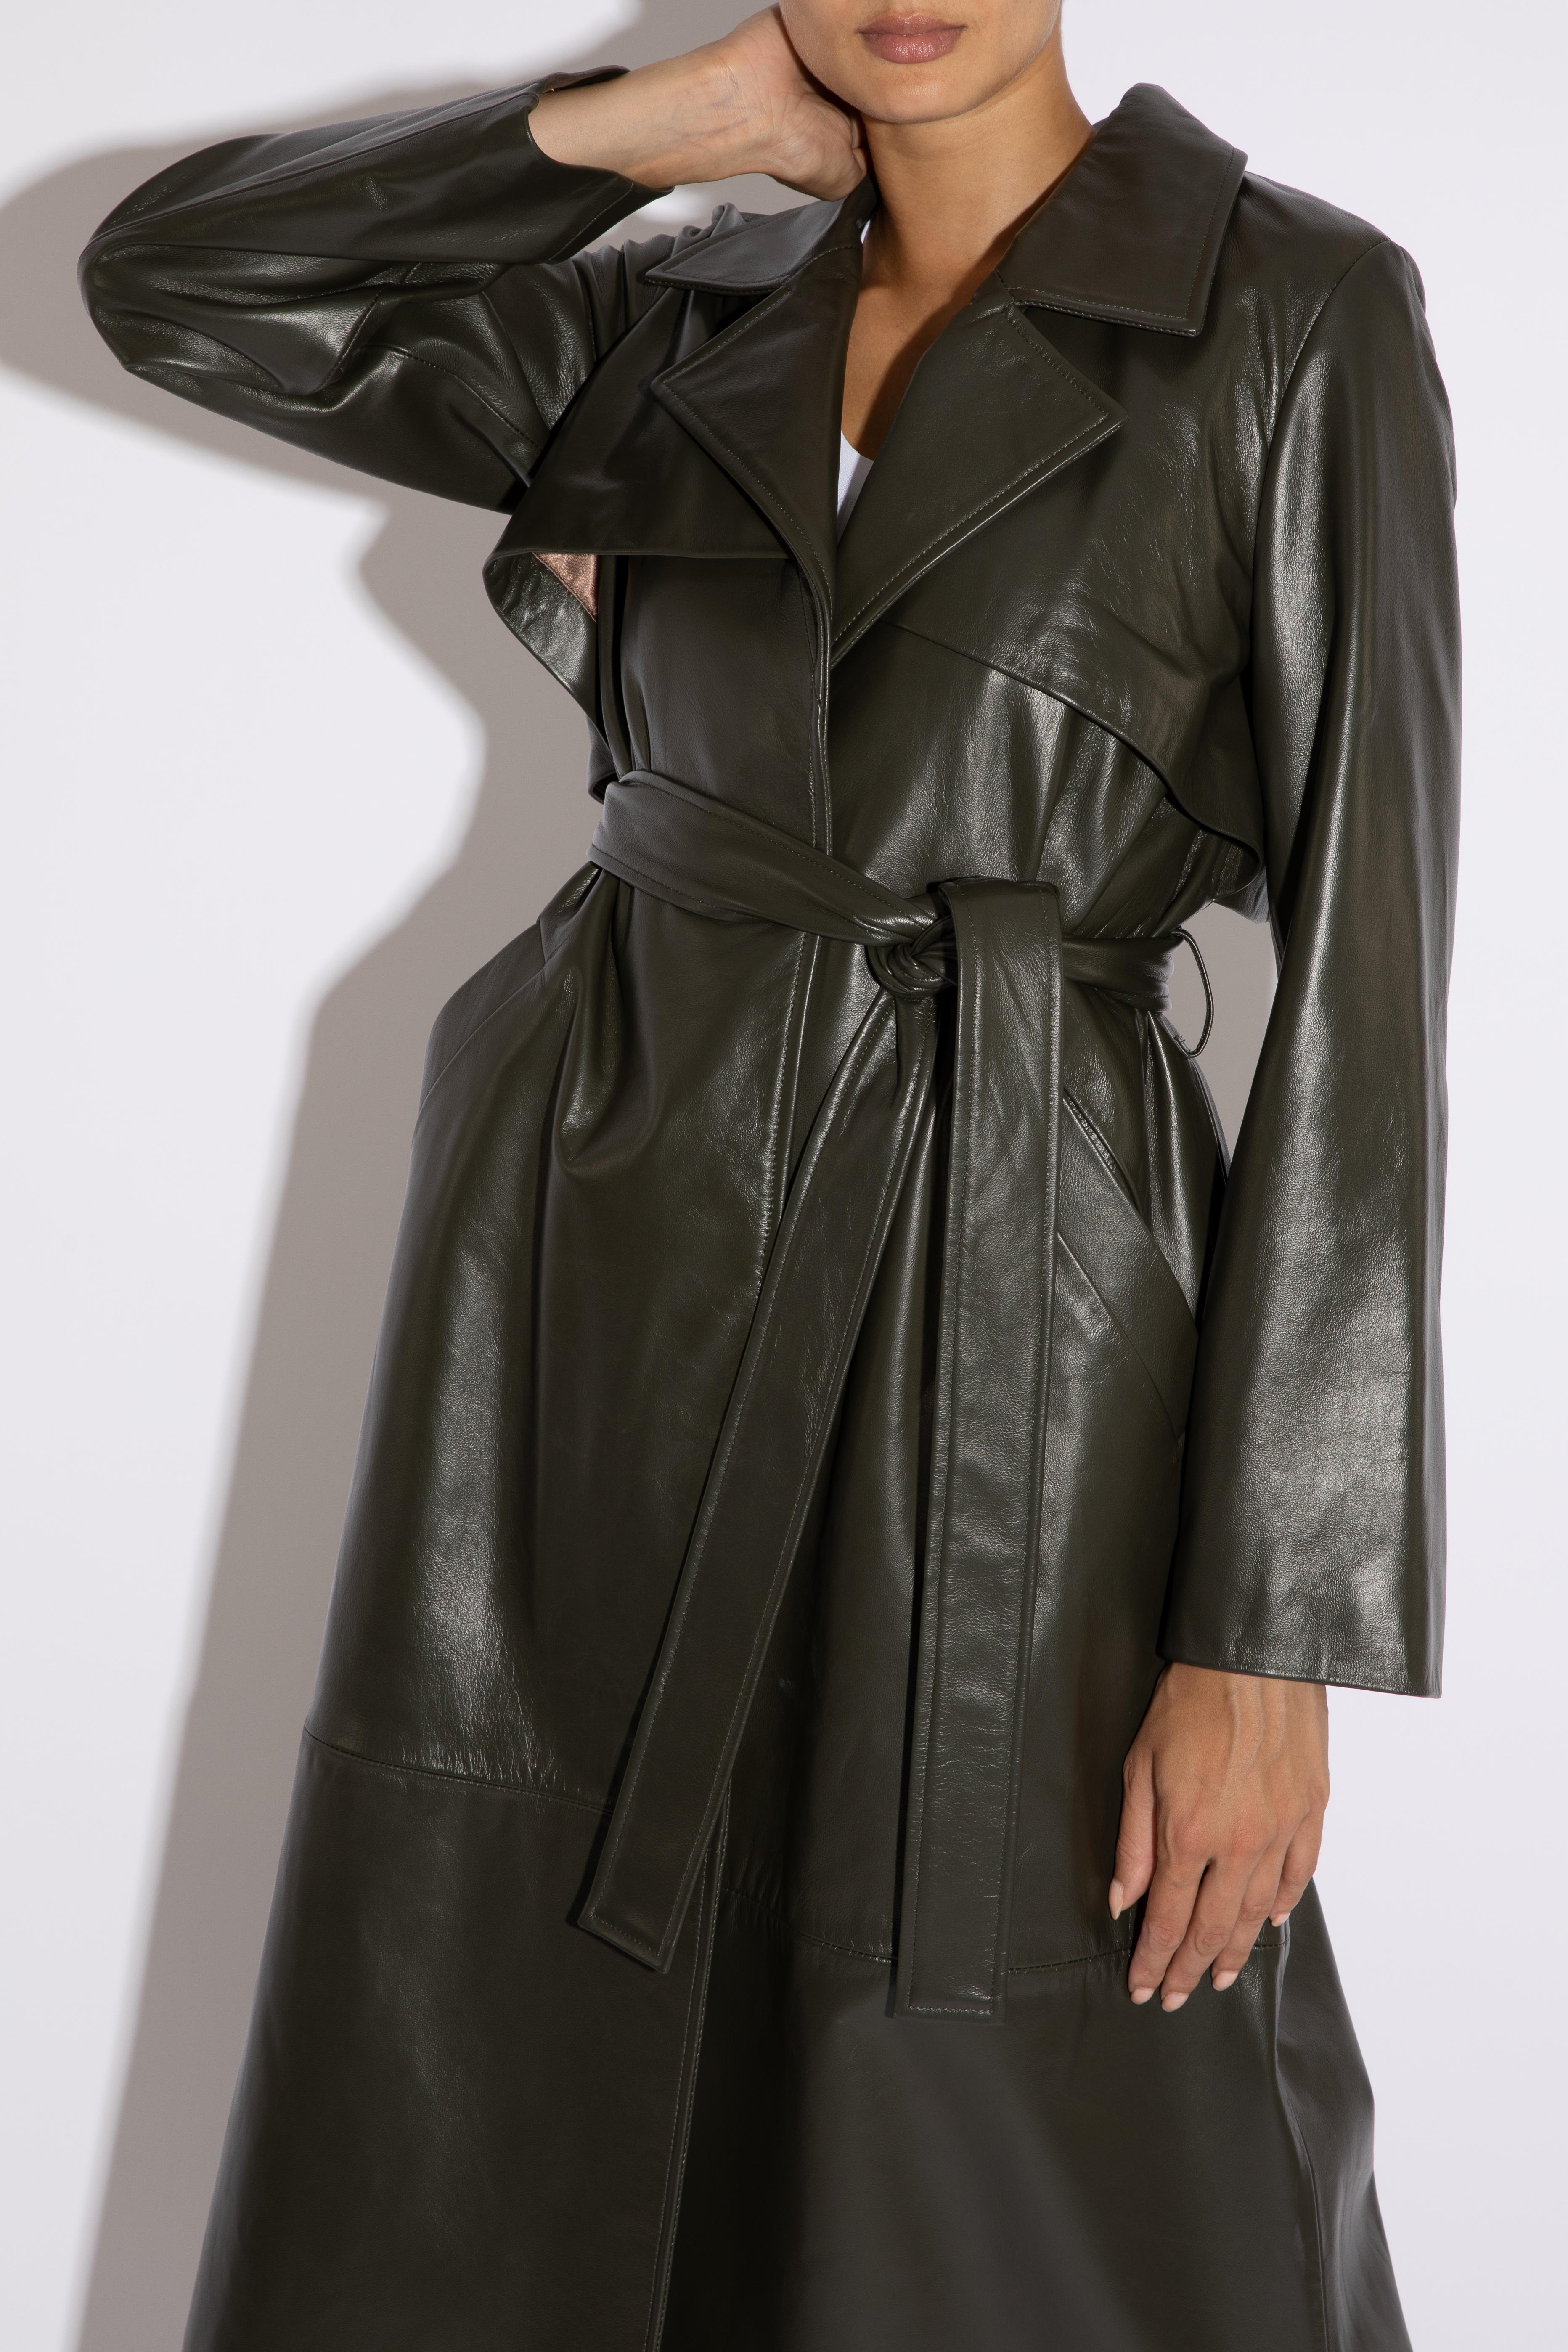 Verheyen London Leather Trench Coat in Dark Khaki Green - Size uk 14 For Sale 2